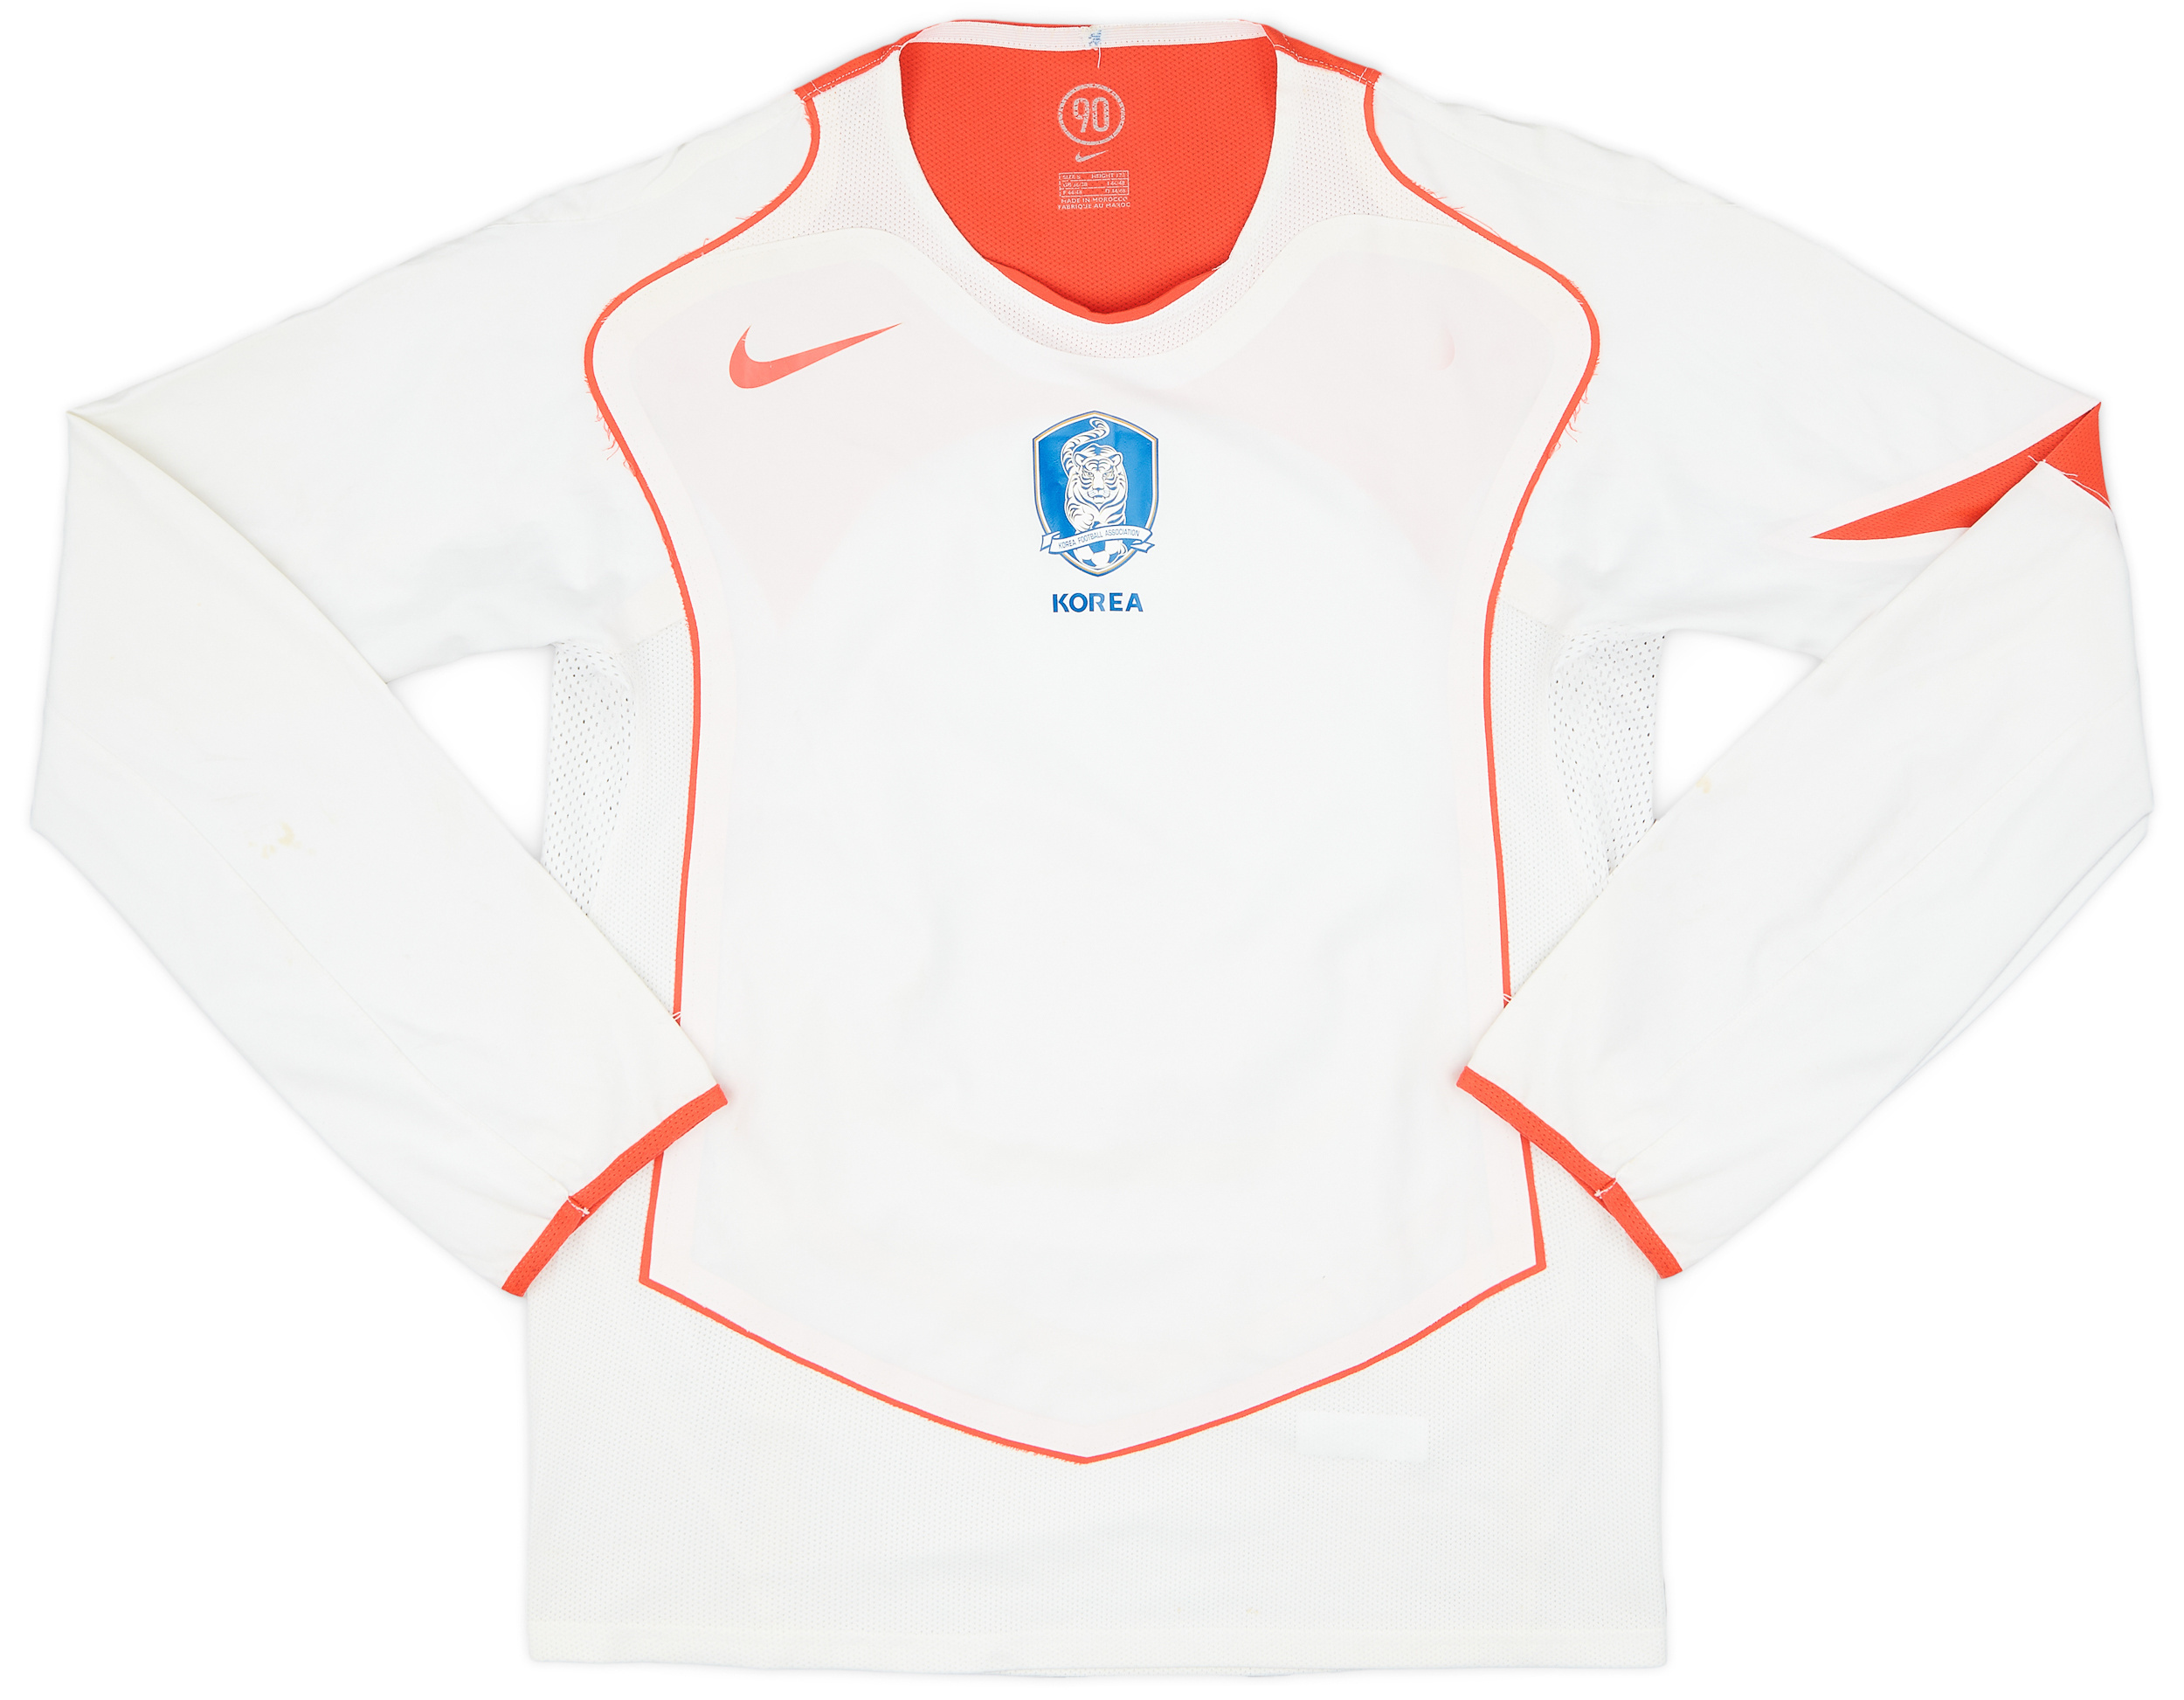 2004-06 South Korea Player Issue Away Shirt - 9/10 - ()